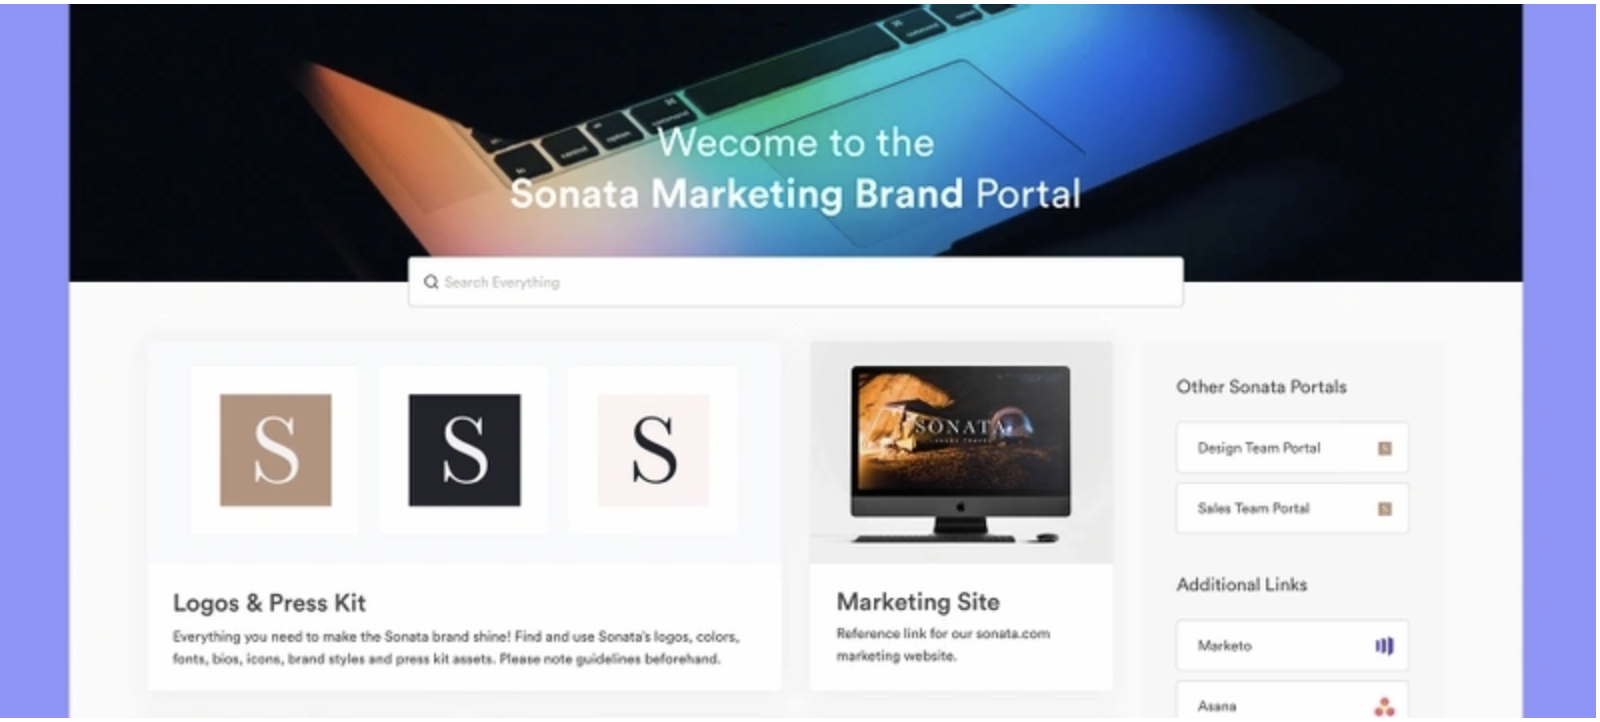 Example of a Brandfolder marketing portal